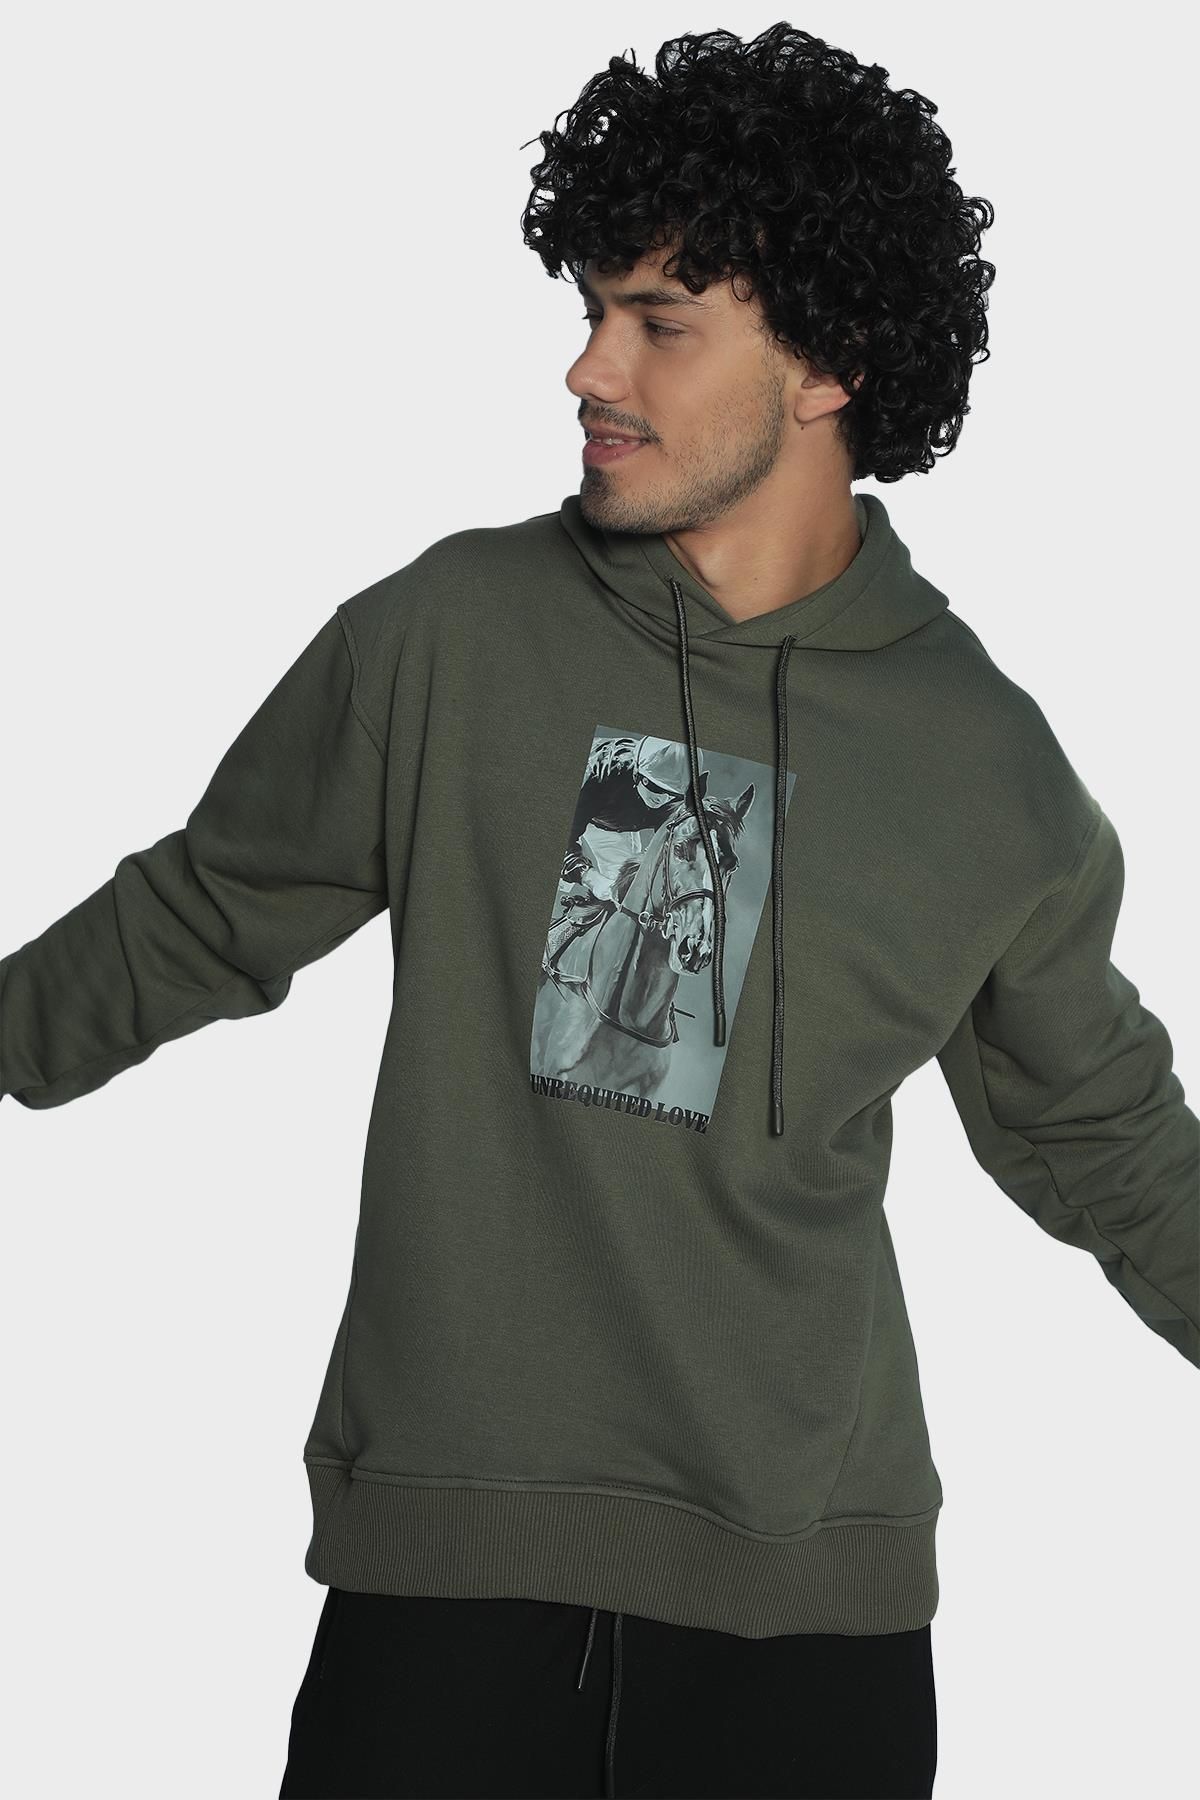 Mens regular cut hooded long sleeve cotton sweatshirt with printed front - Khaki